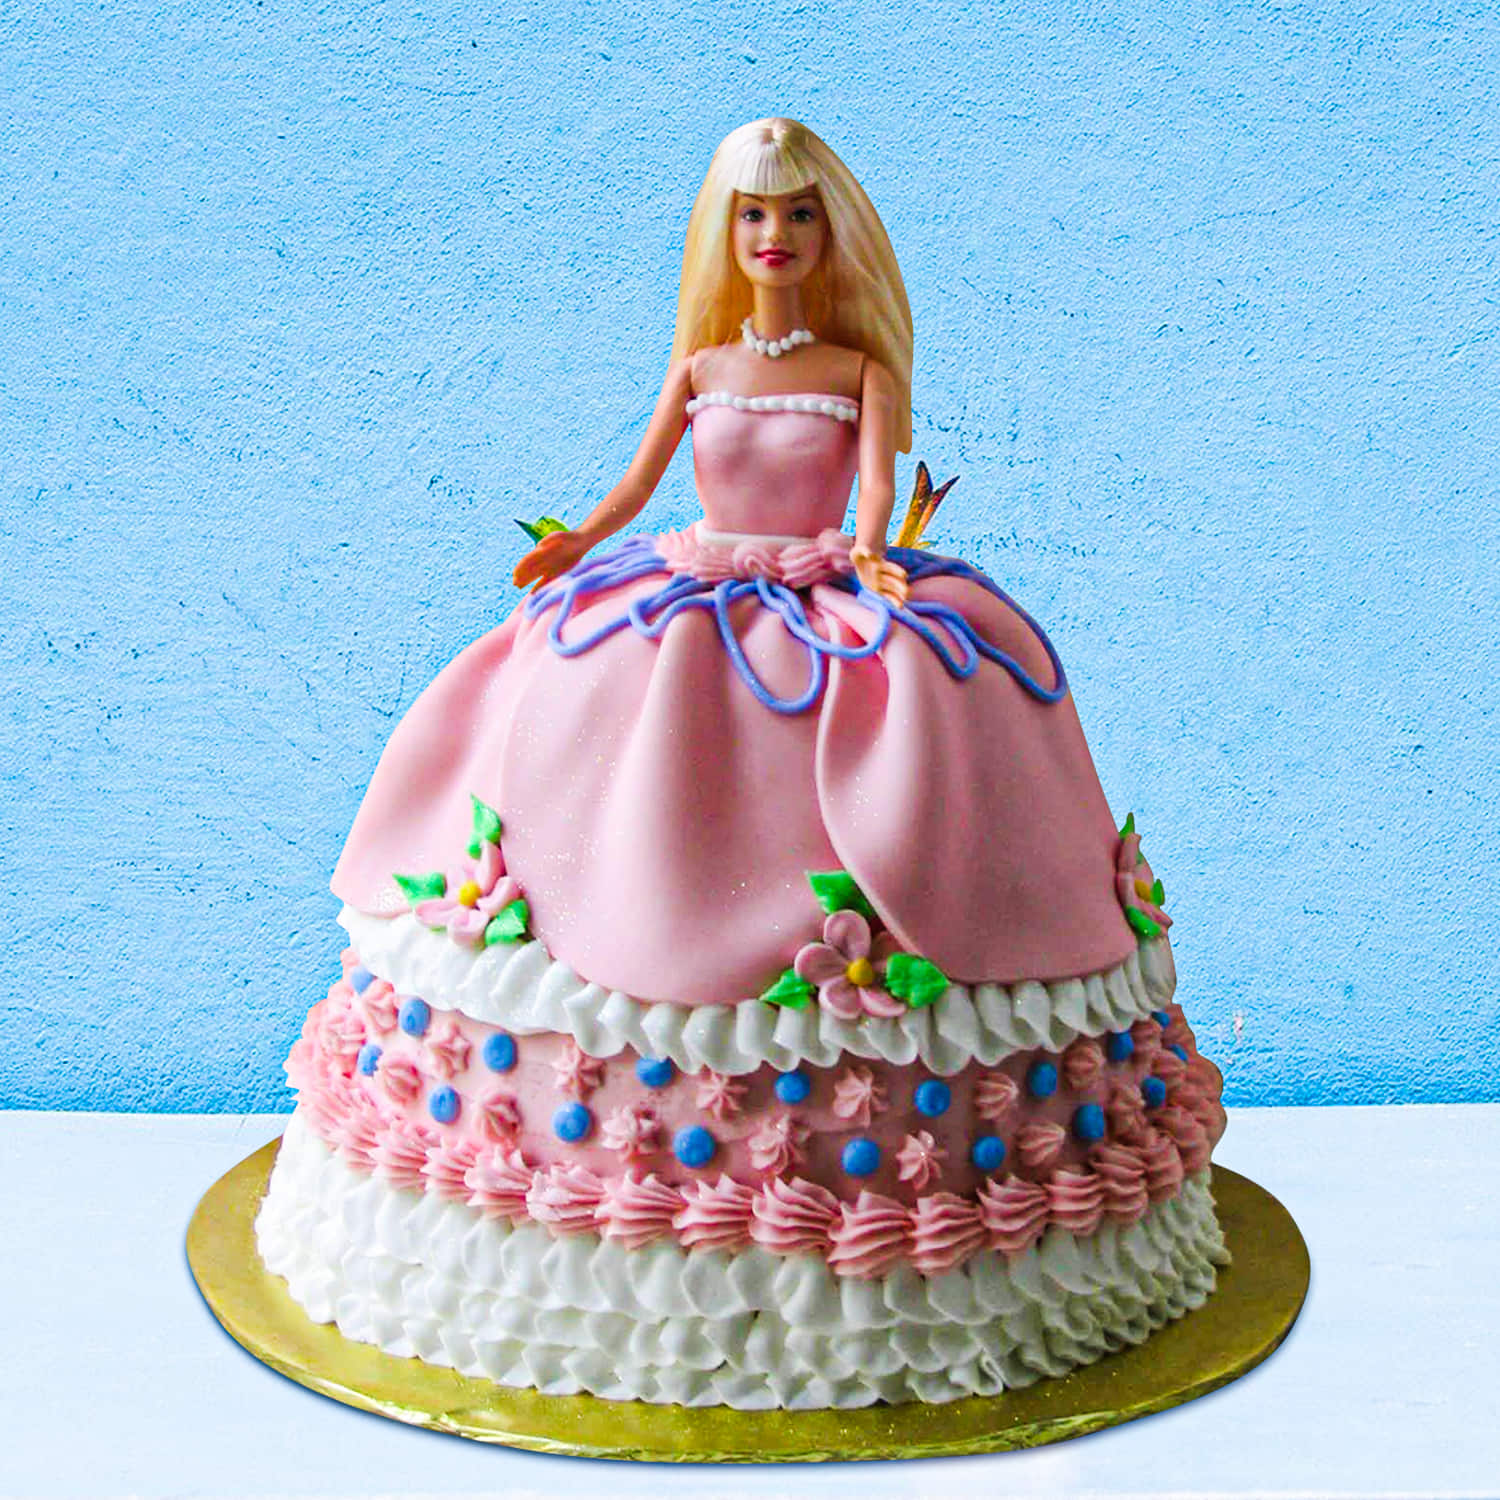 A Barbie Birthday Cake | chasing thyme